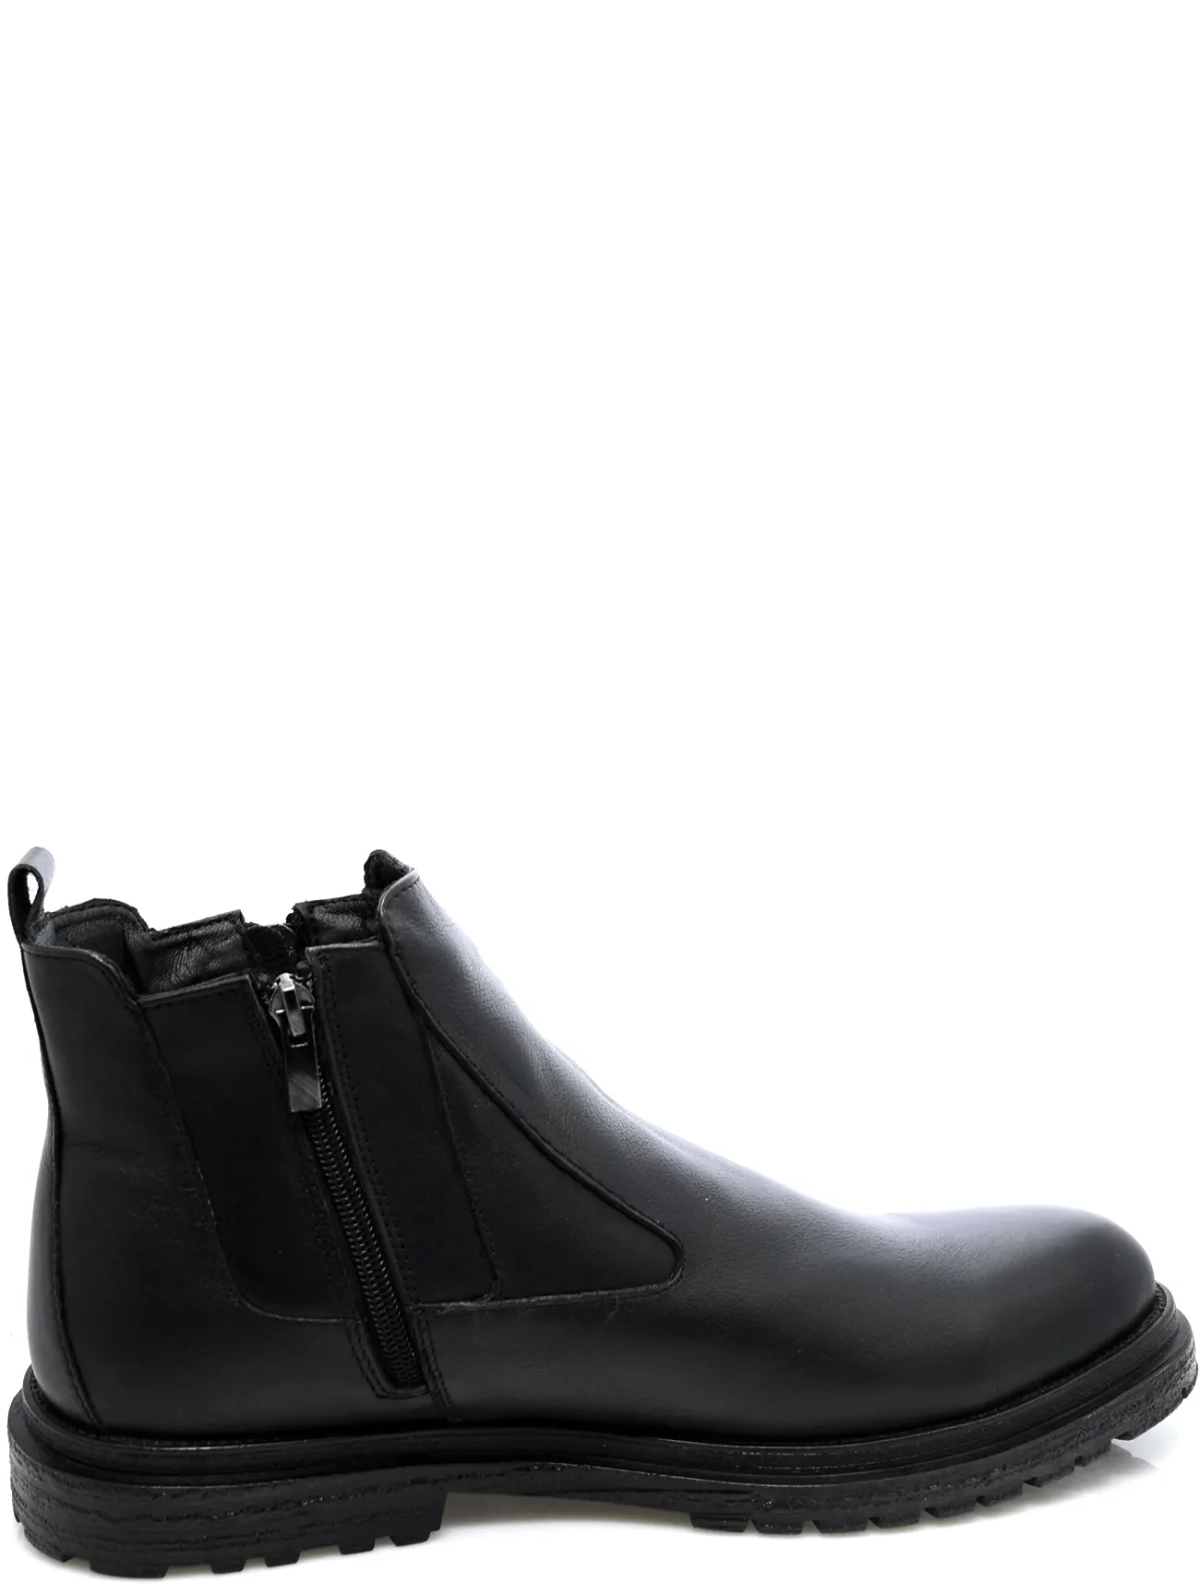 EDERRO 255-2030-04 мужские ботинки